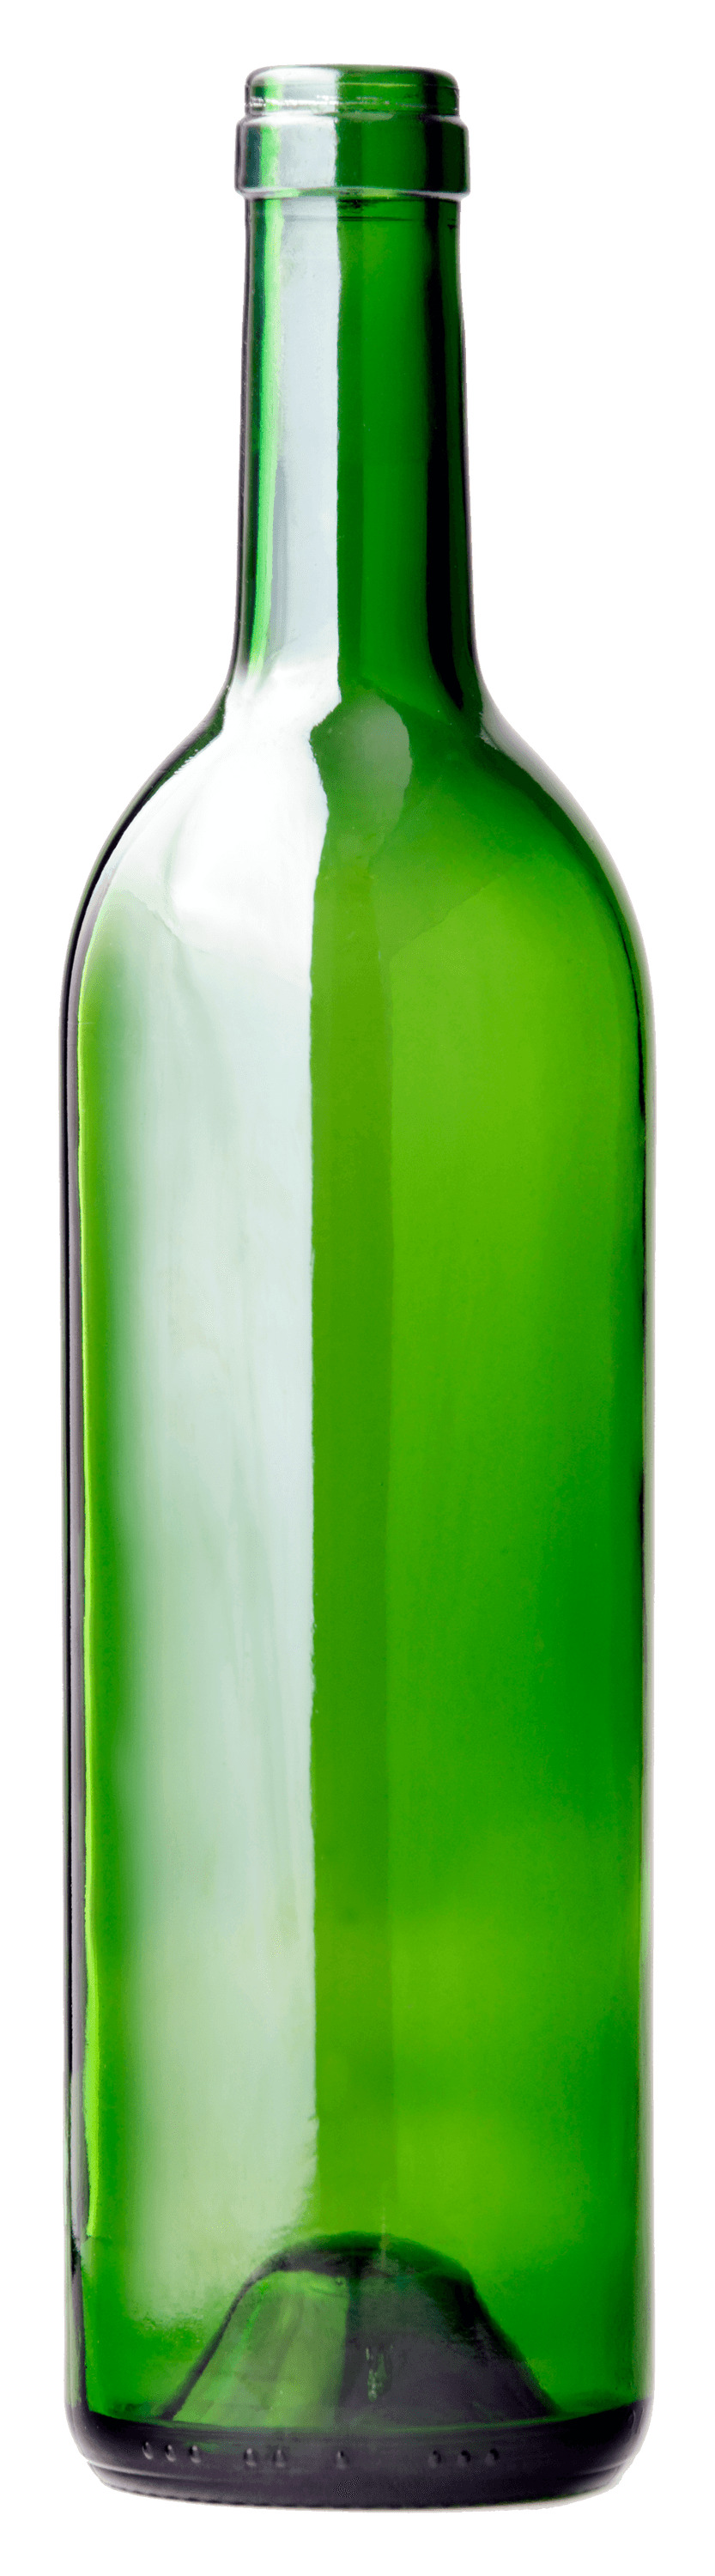 Bottle Long Green icons